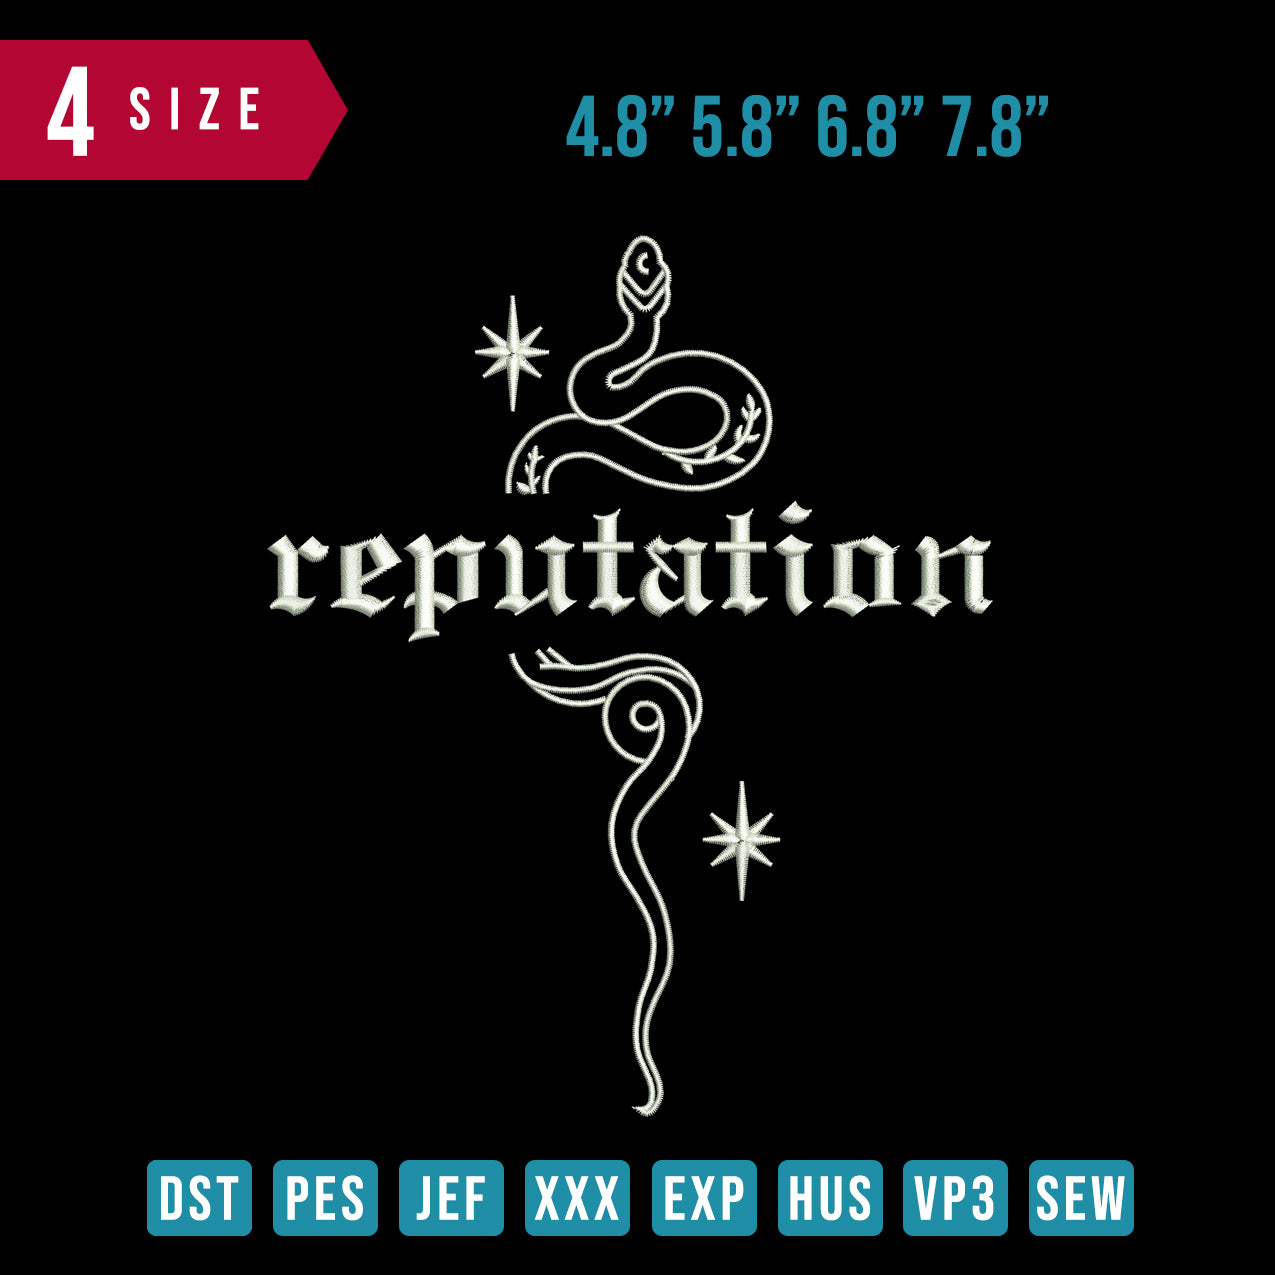 Reputation Snake